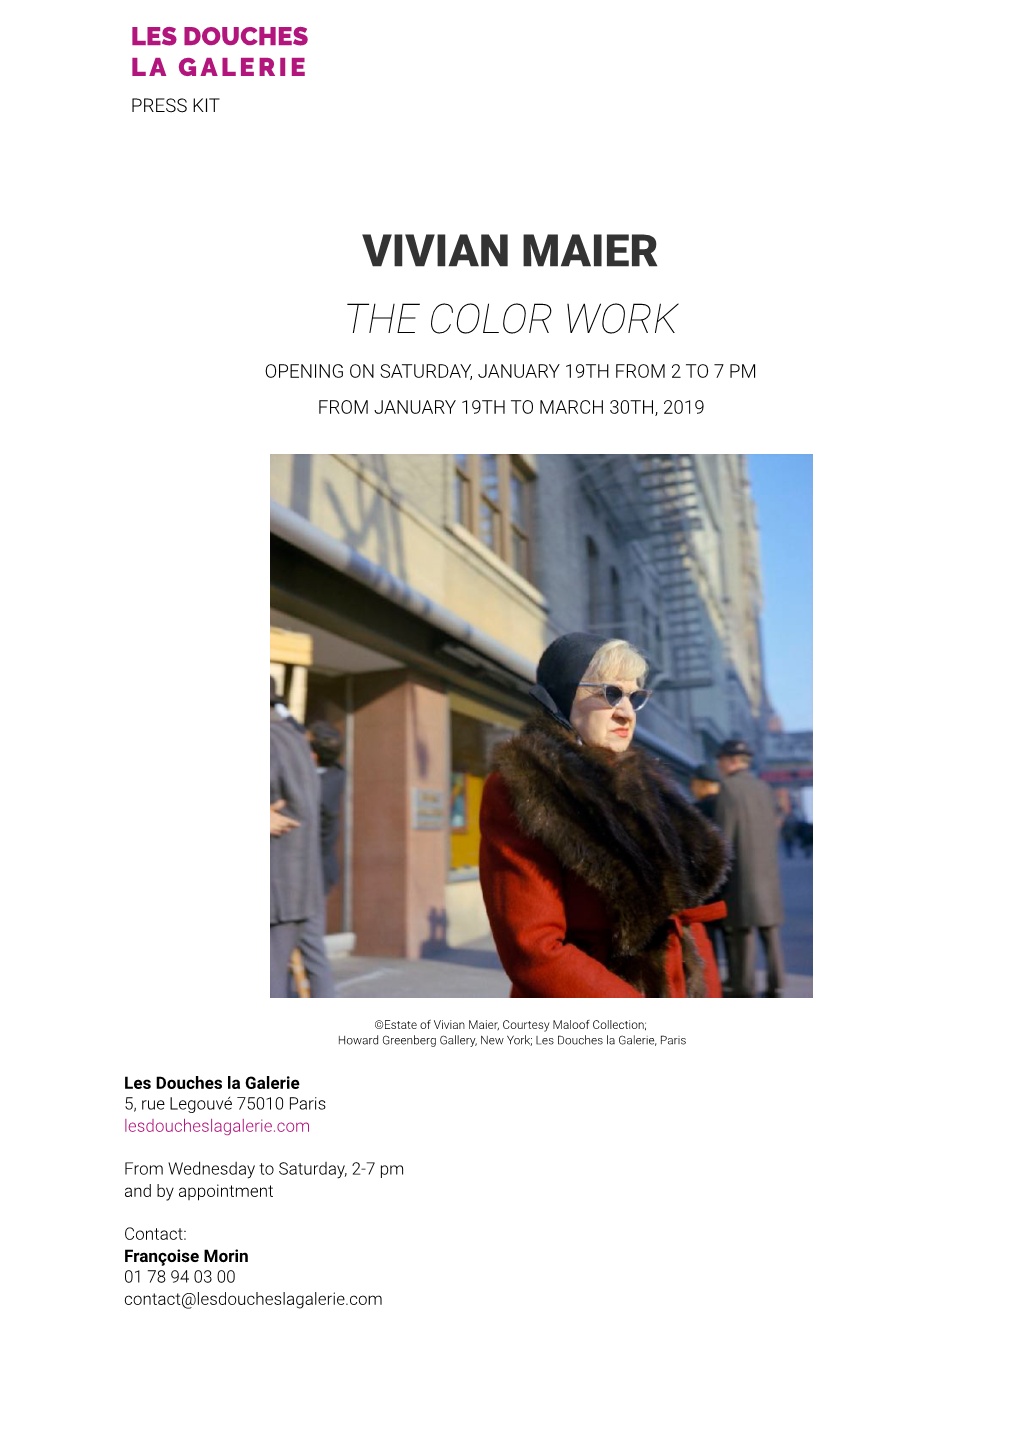 Vivian Maier the Color Work